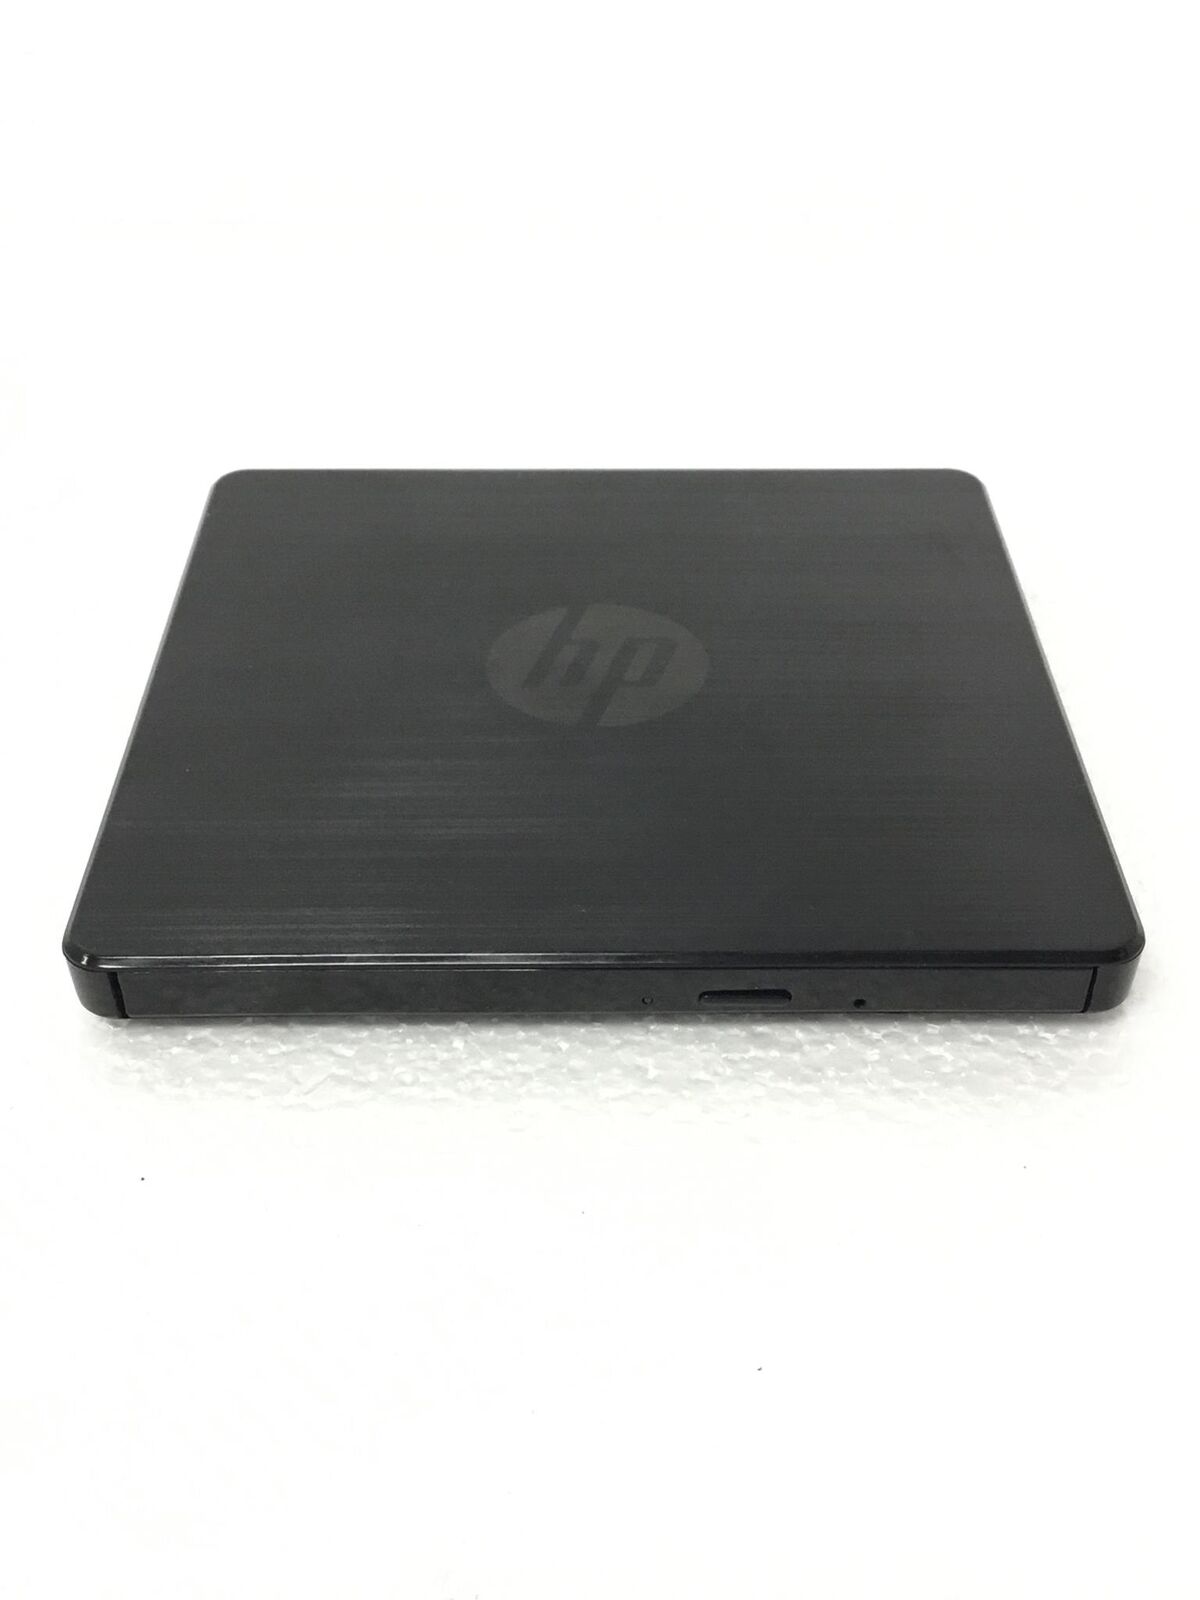 HP USB External DVDRW Drive GP60NB60 P/N: 800696-001 Working 